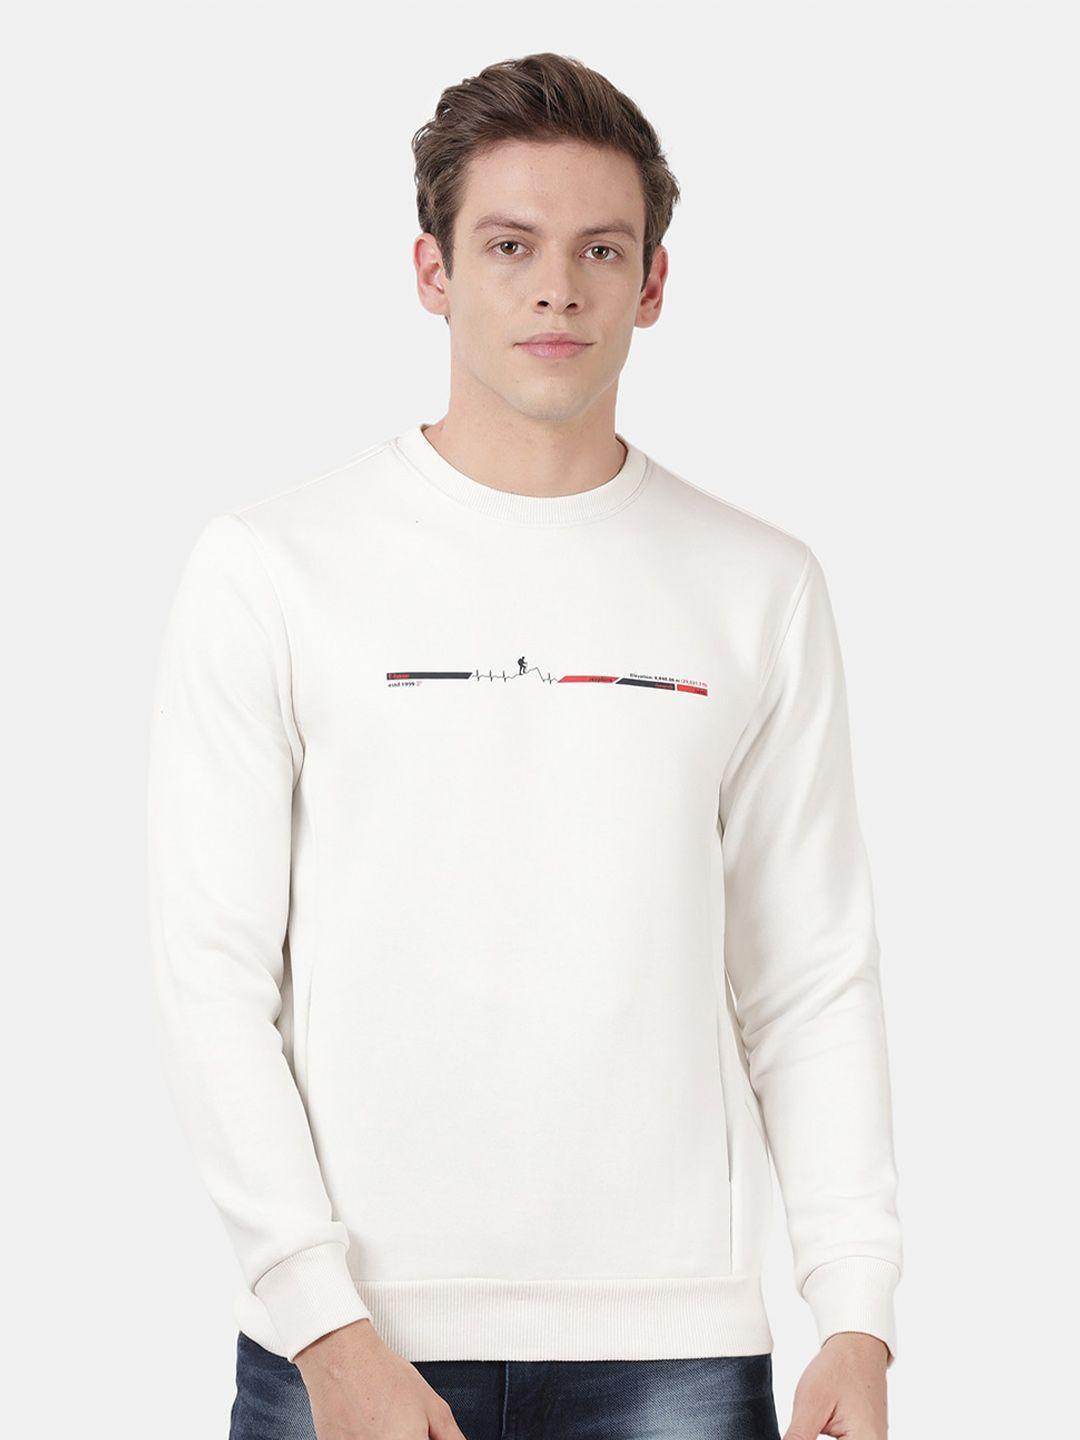 t-base-graphic-printed-cotton-sweatshirt